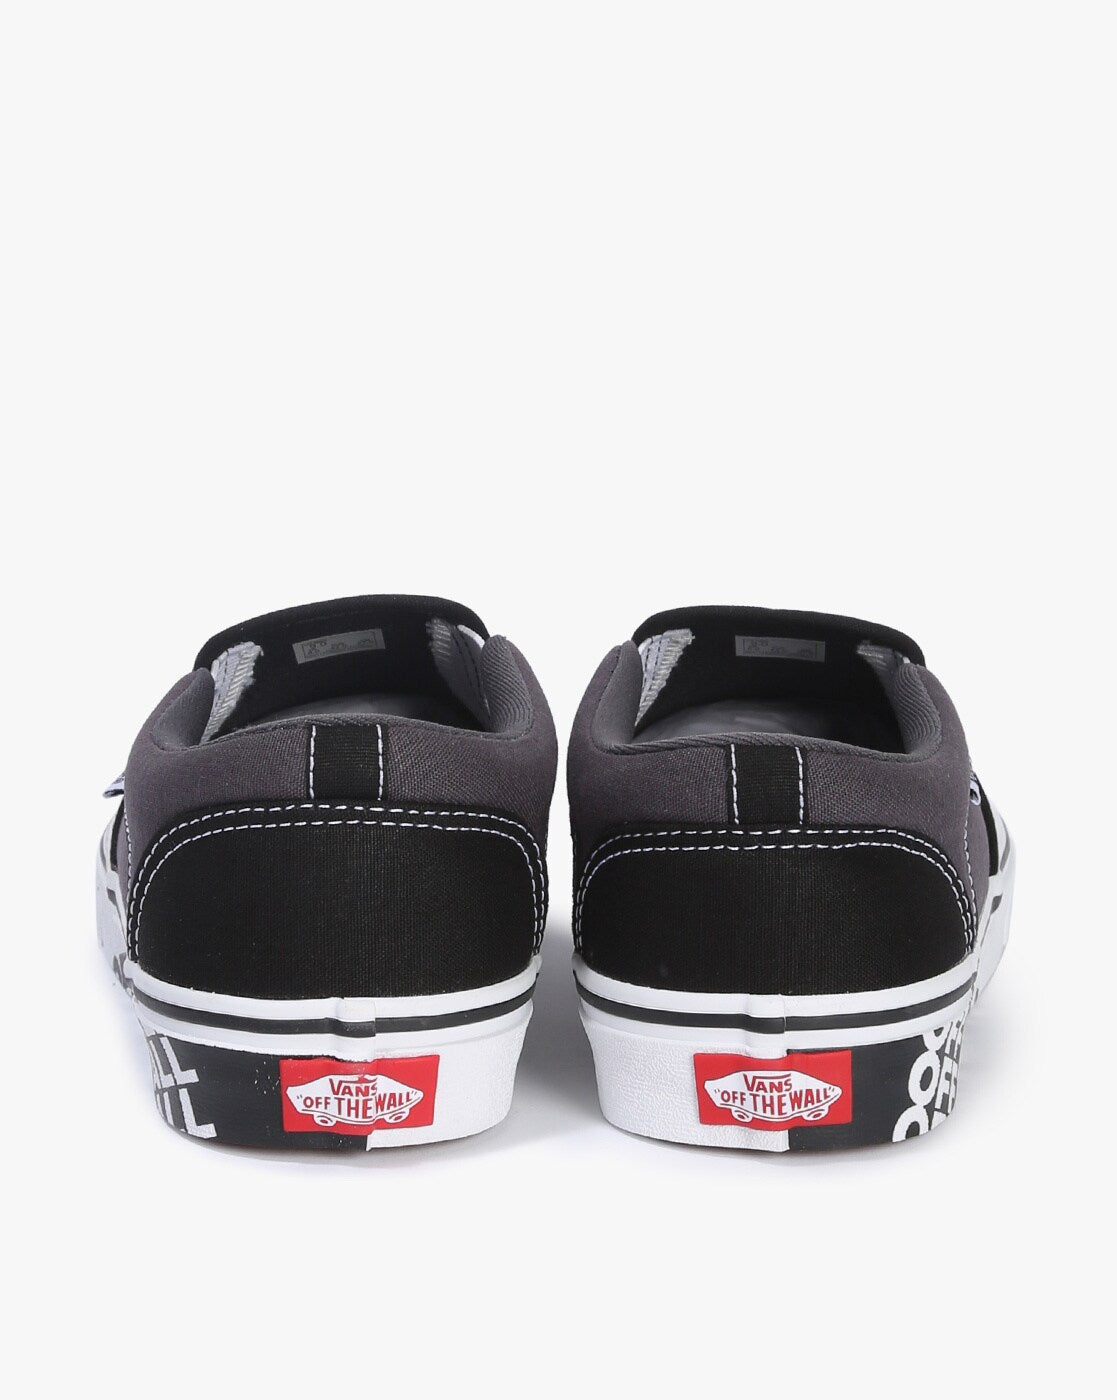 Asher Typographic Print Slip-On Sneaker-71002757